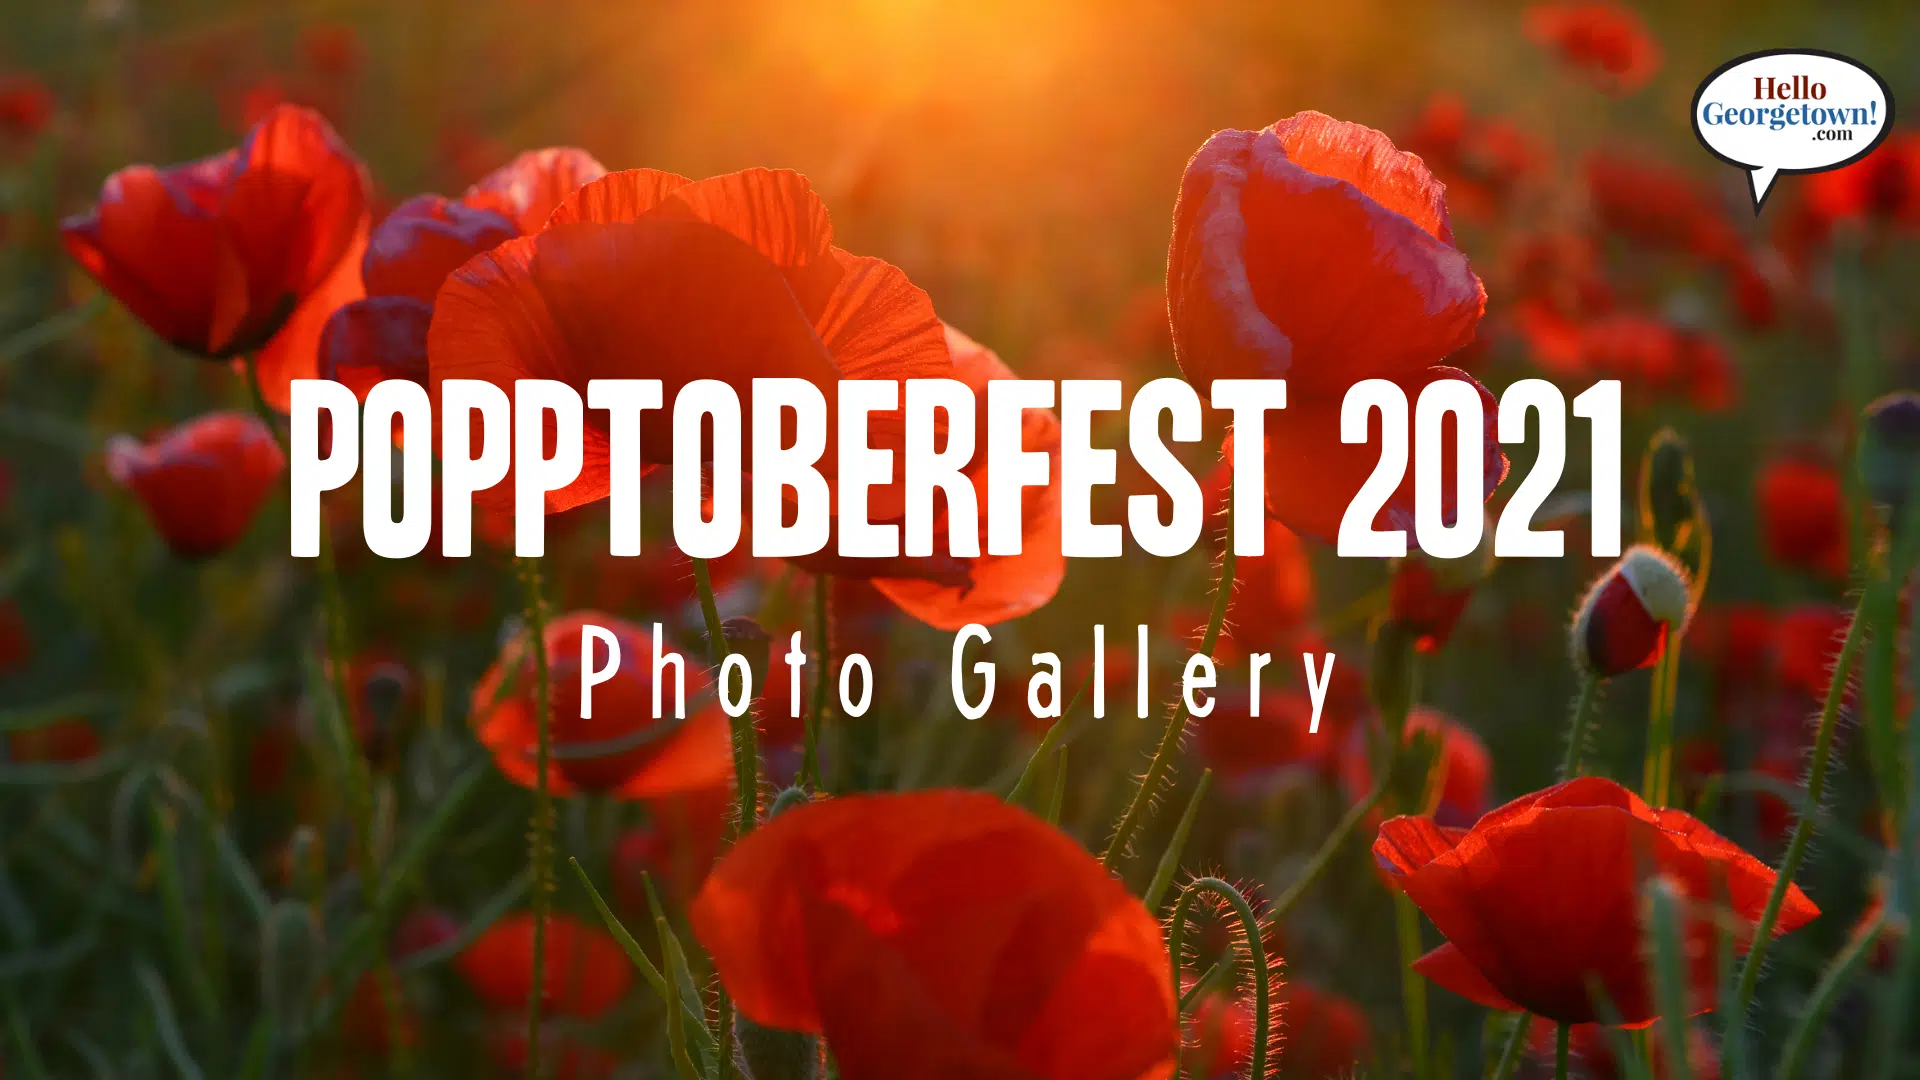 Georgetown's 2021 Red Poppy Festival Returns in October as